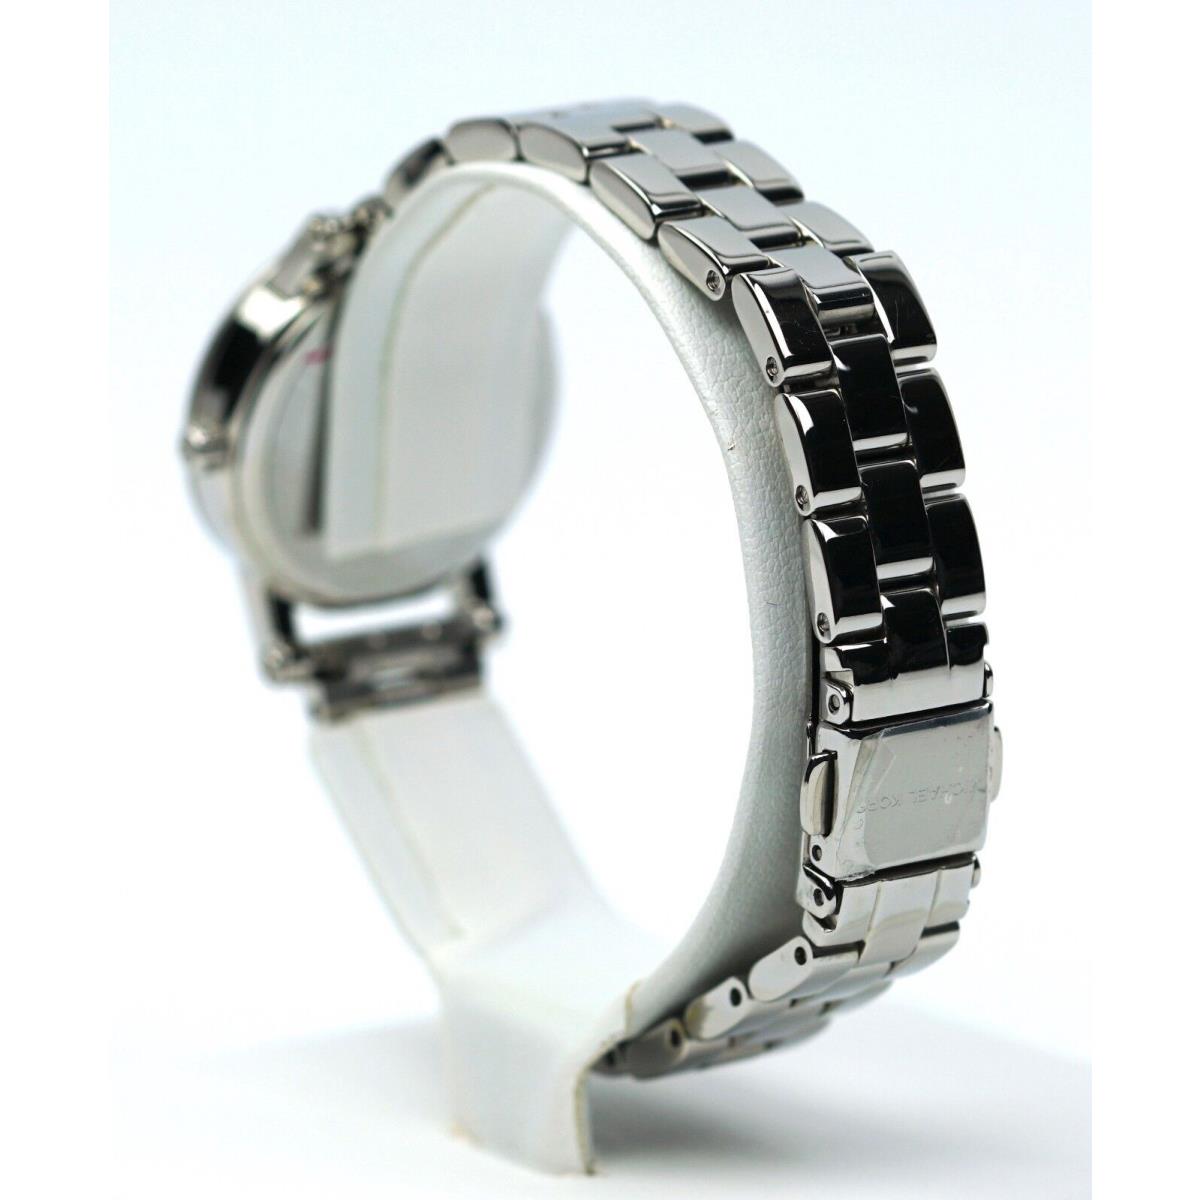 Michael Kors watch  - Silver Band